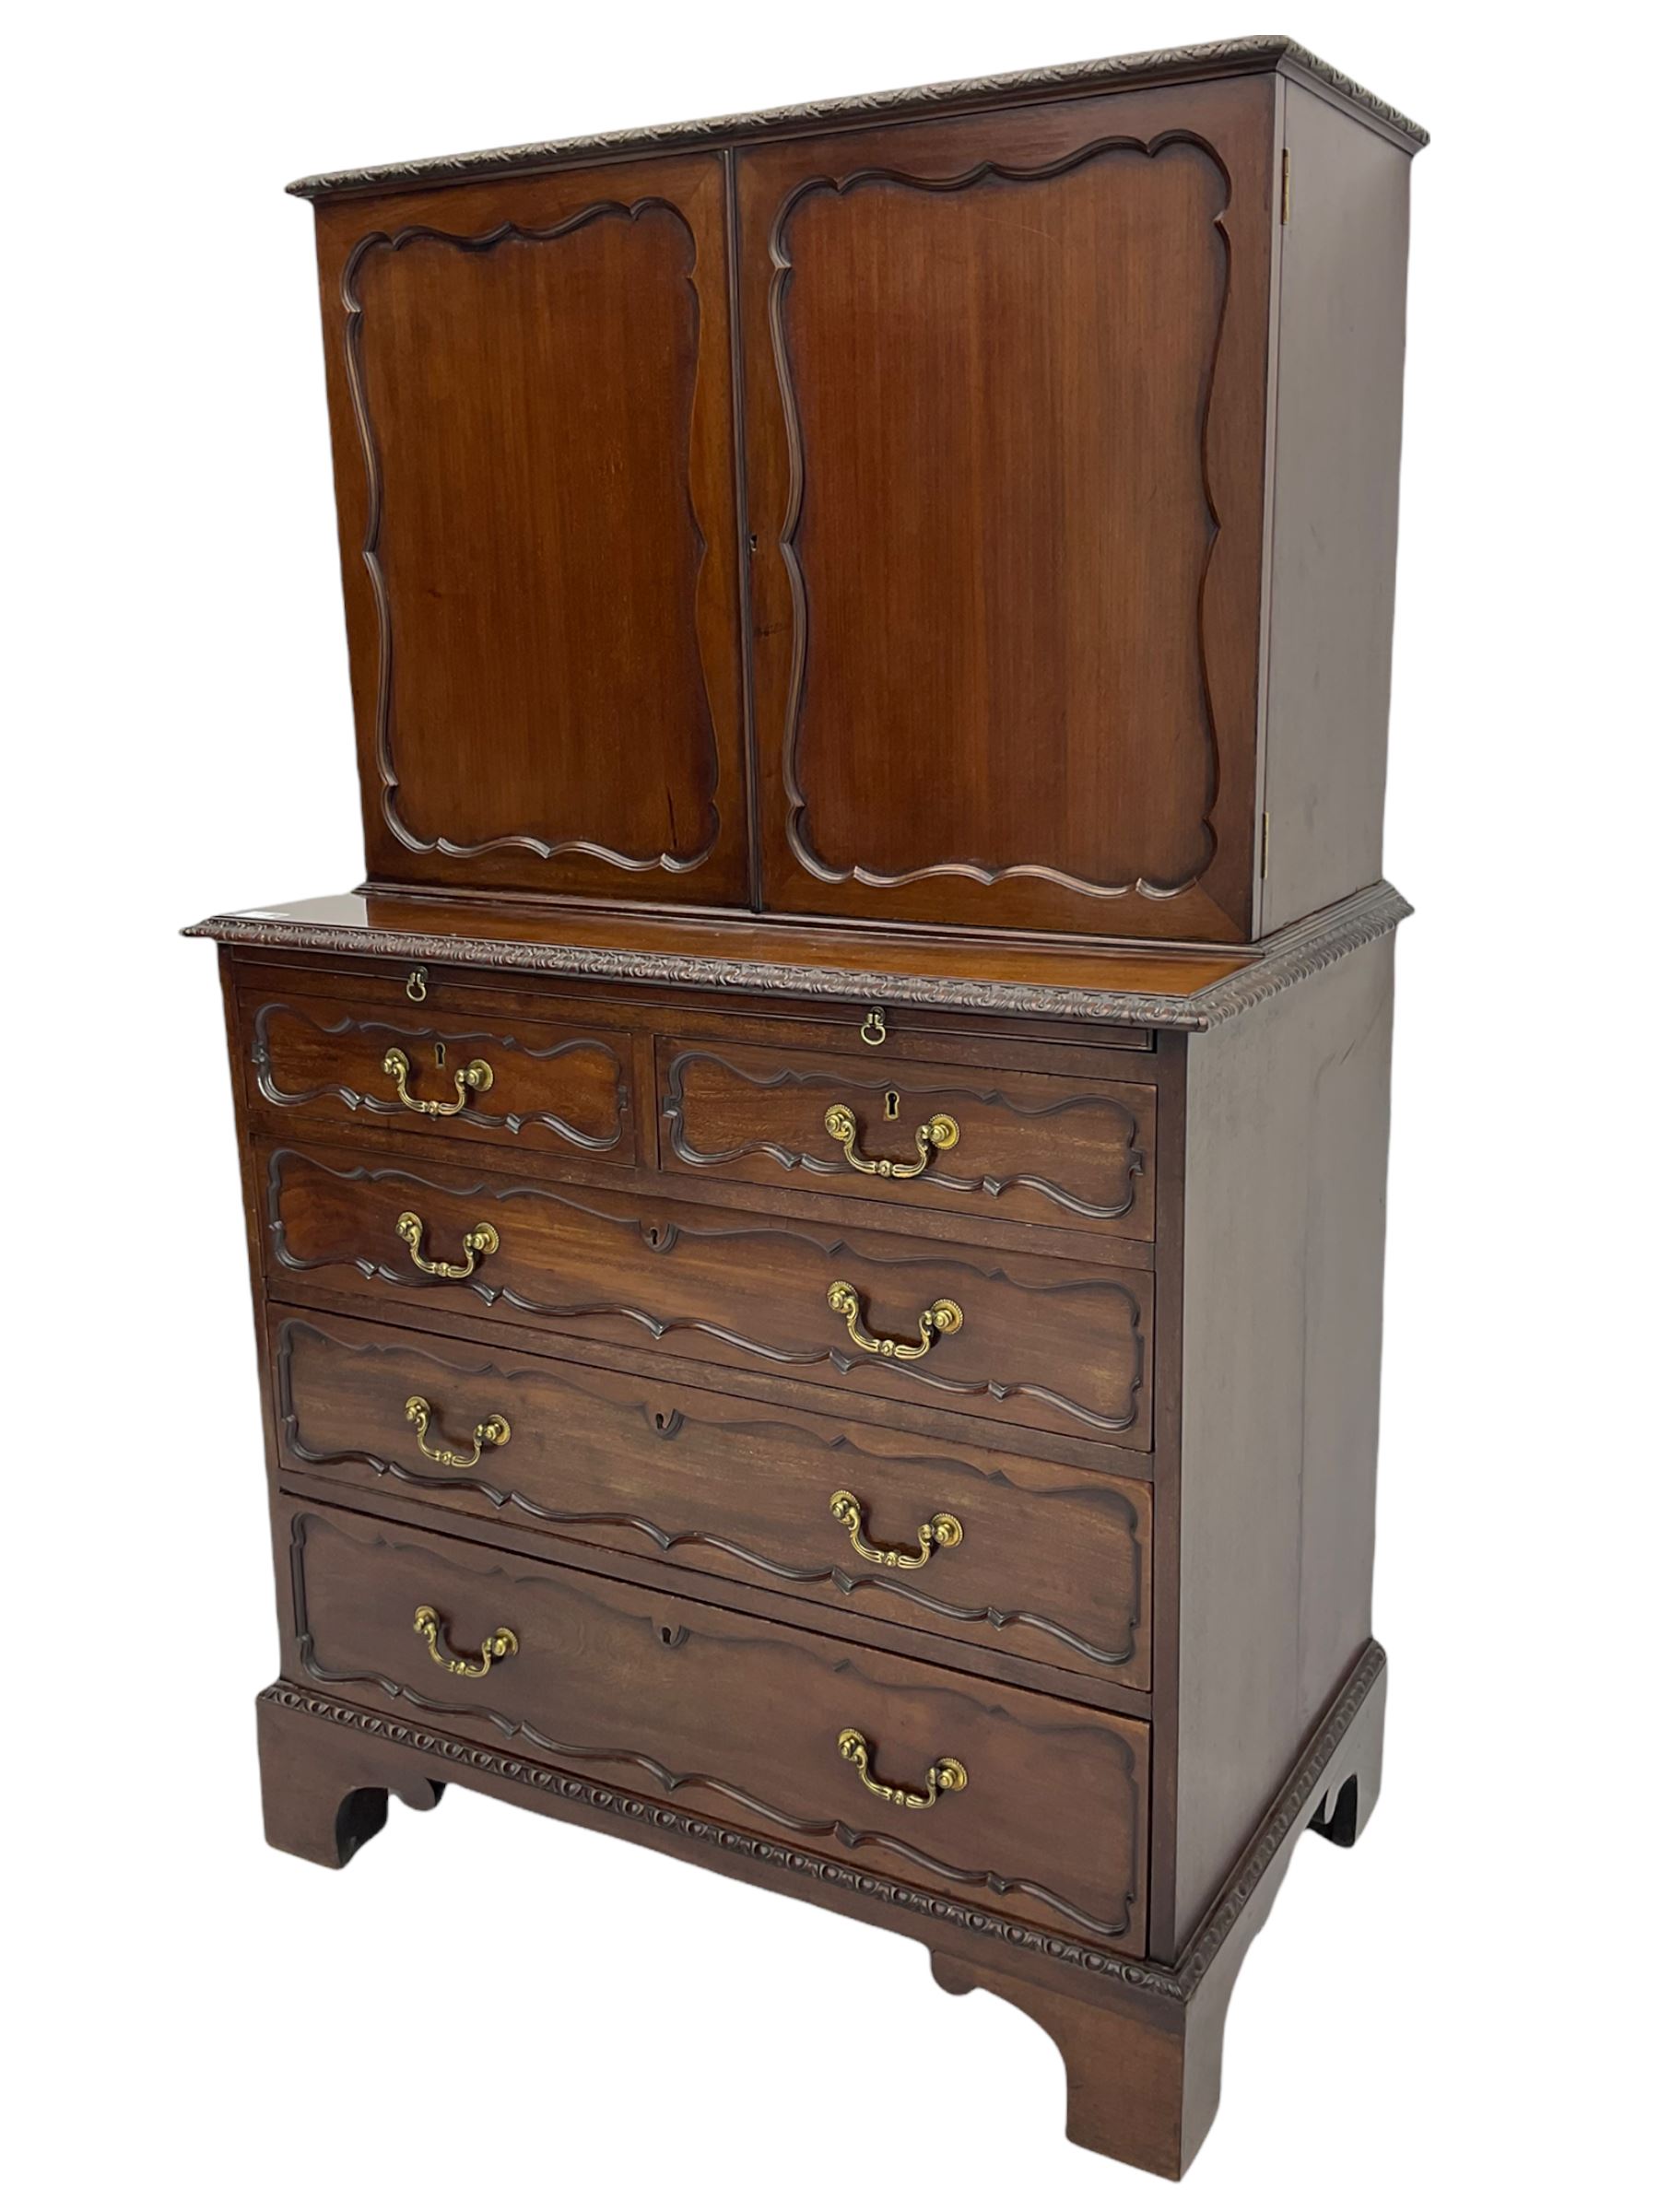 Late 19th century mahogany estate type cabinet - Image 4 of 14